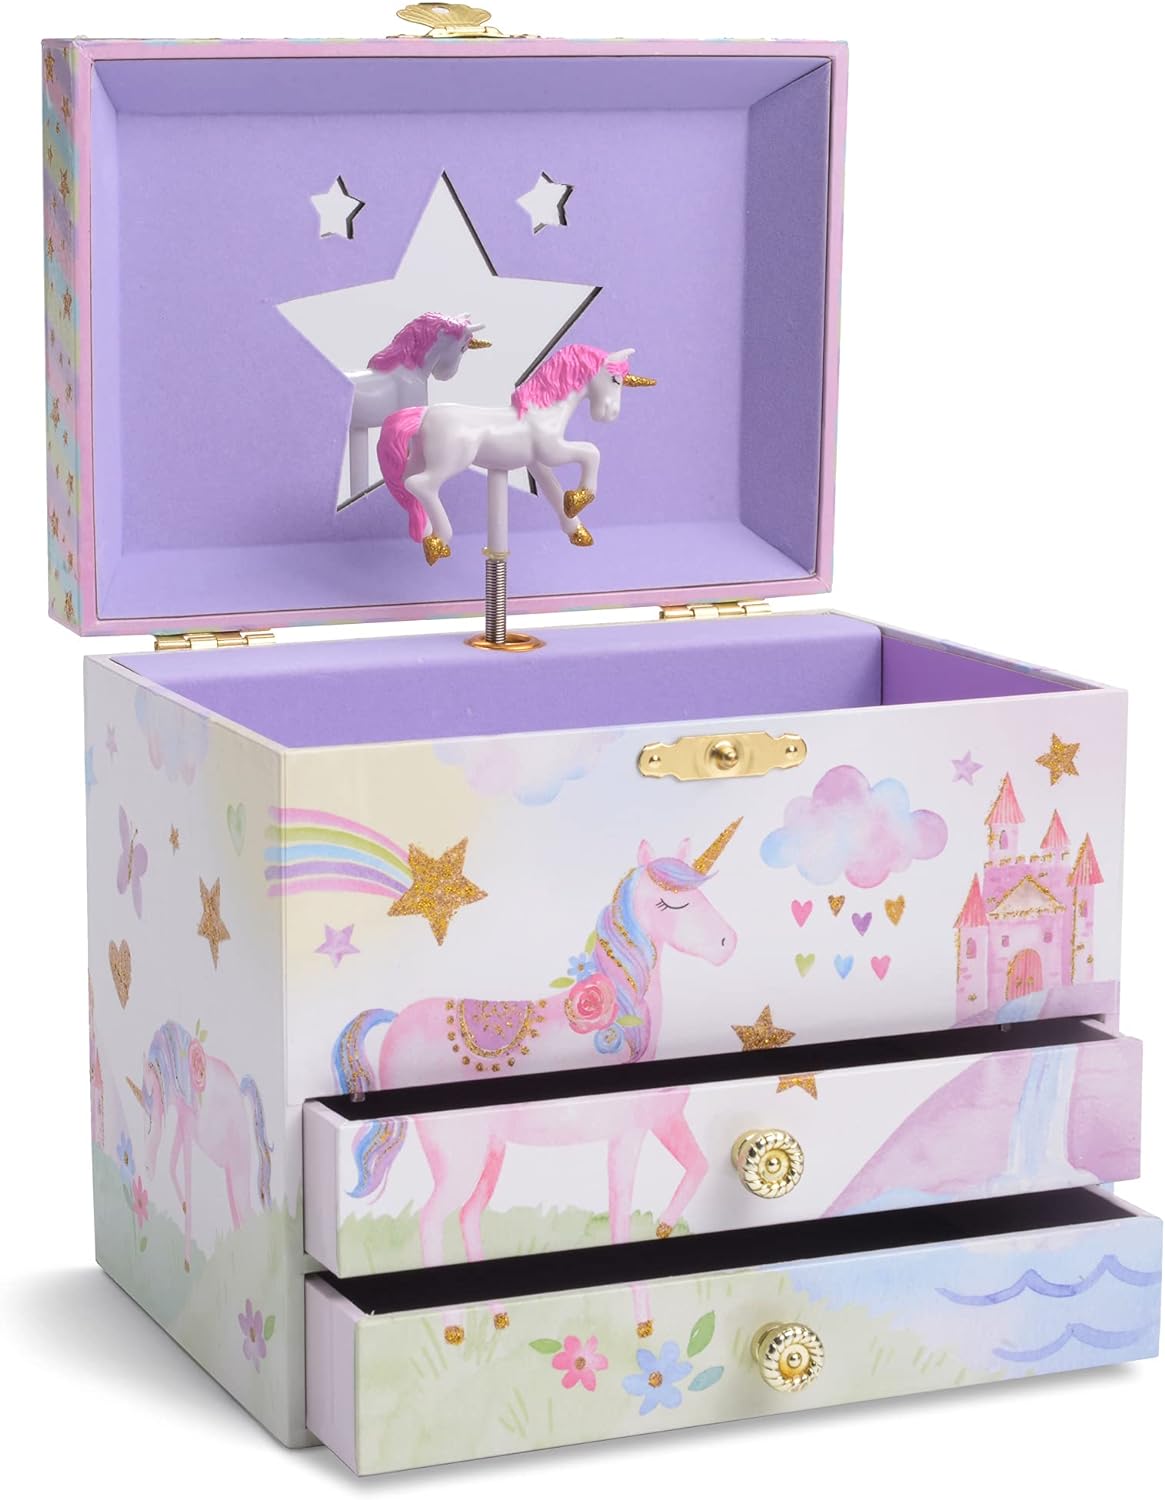 Jewelry Storage Box with Glitter Rainbow and Stars Unicorn Design Unicorn Music Box